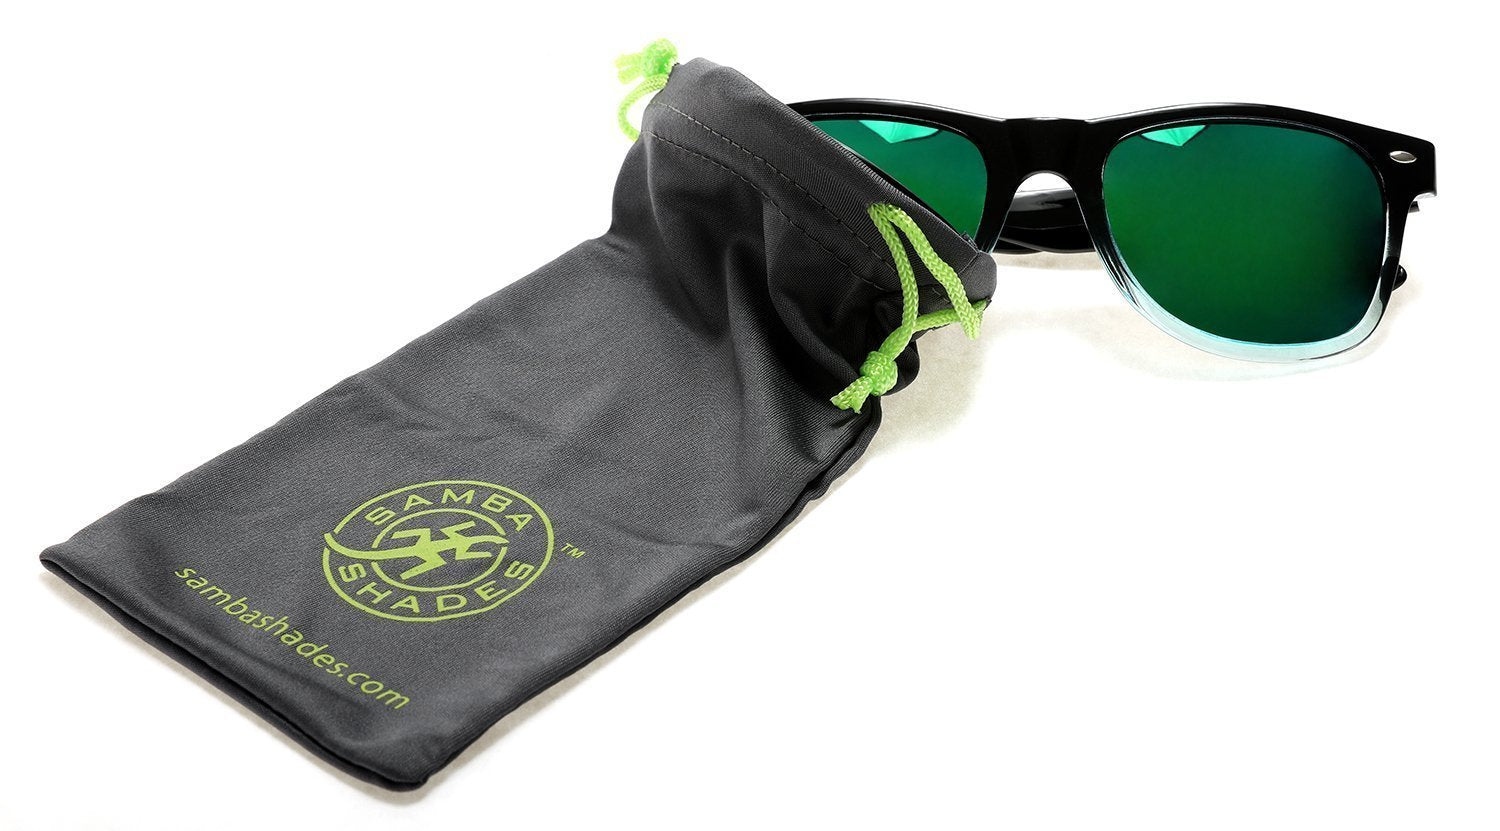 Polarized Modern Venice Horn Rimmed Sunglasses - Green Black-Samba Shades